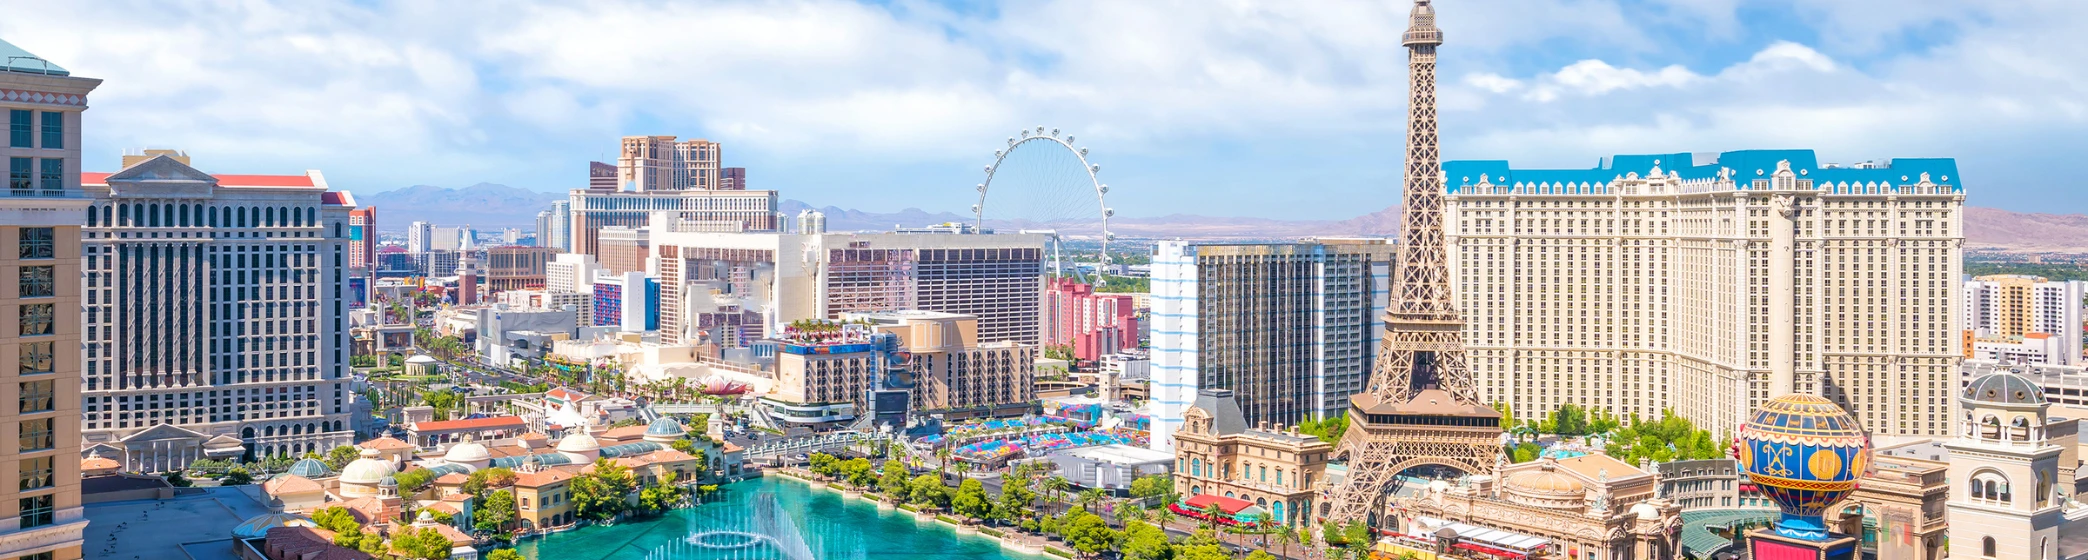 Nevada work and travel ไป รัฐ ไหน อเมริกา เมือง Las Vegas ฝึกงาน ทำงาน ต่างประเทศ เที่ยว อเมริกา USA โครงการแลกเปลี่ยน วัฒนธรรม newstep new step